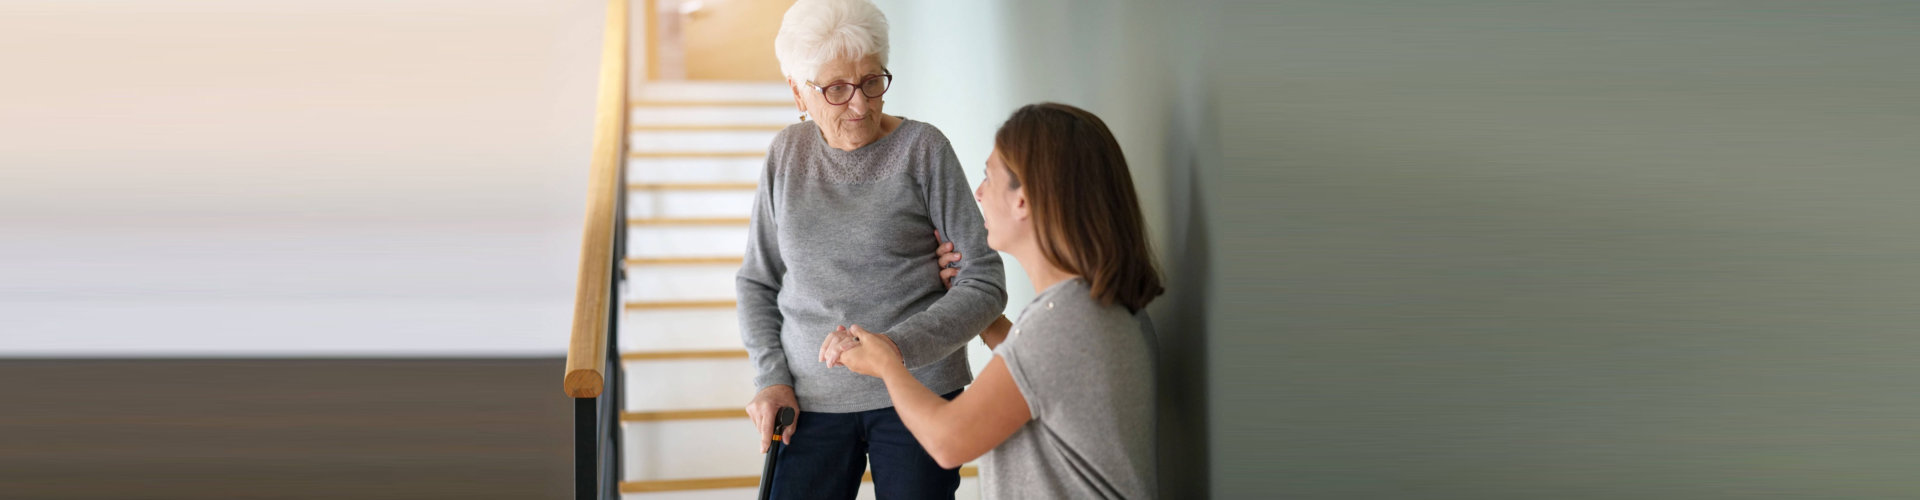 caregiver assissting senior woman